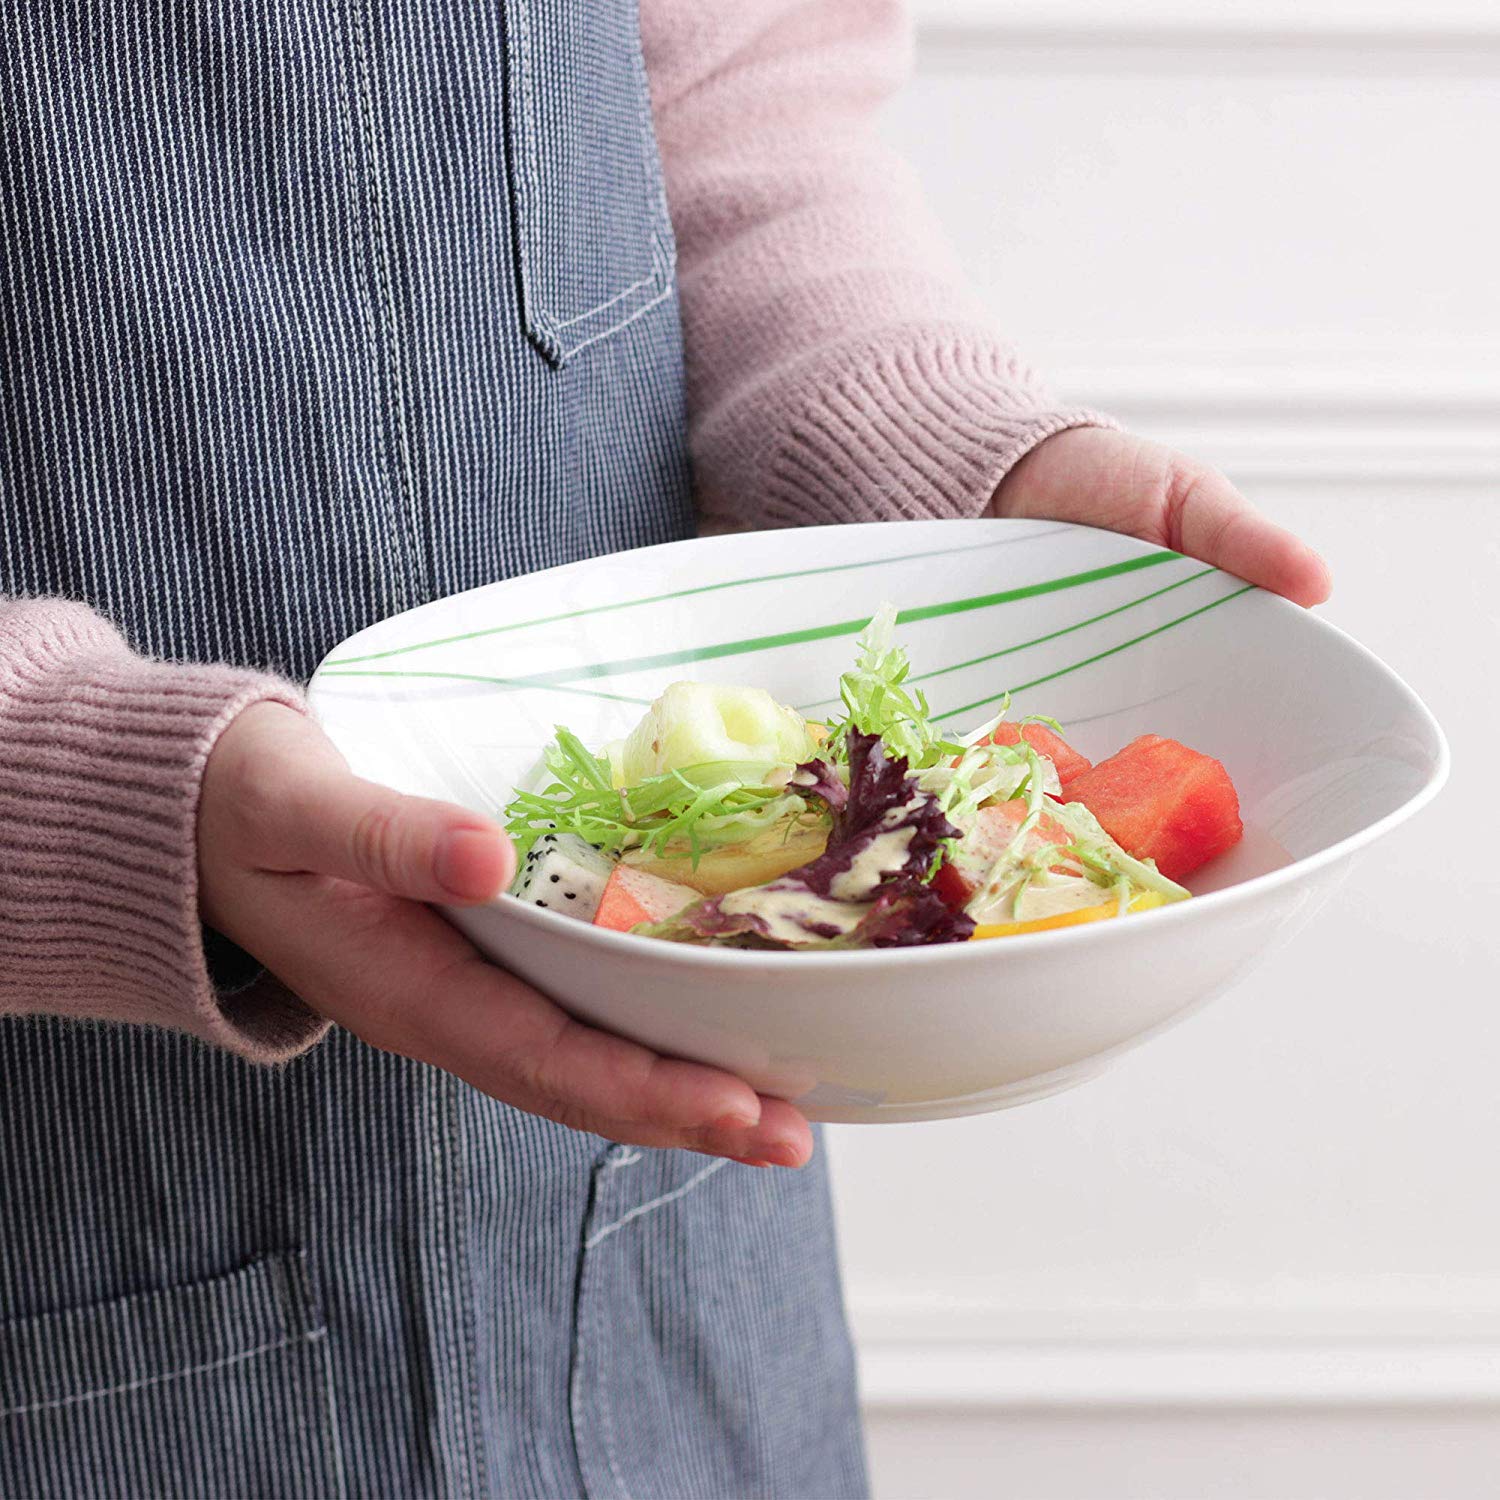 AVIVA Porcelain Round Fruit & Salad Bowl Set(4-Pieces) - Nordic Side - AVIVA, Bowl, Fruit, Pieces, Porcelain, Round, Salad, Set